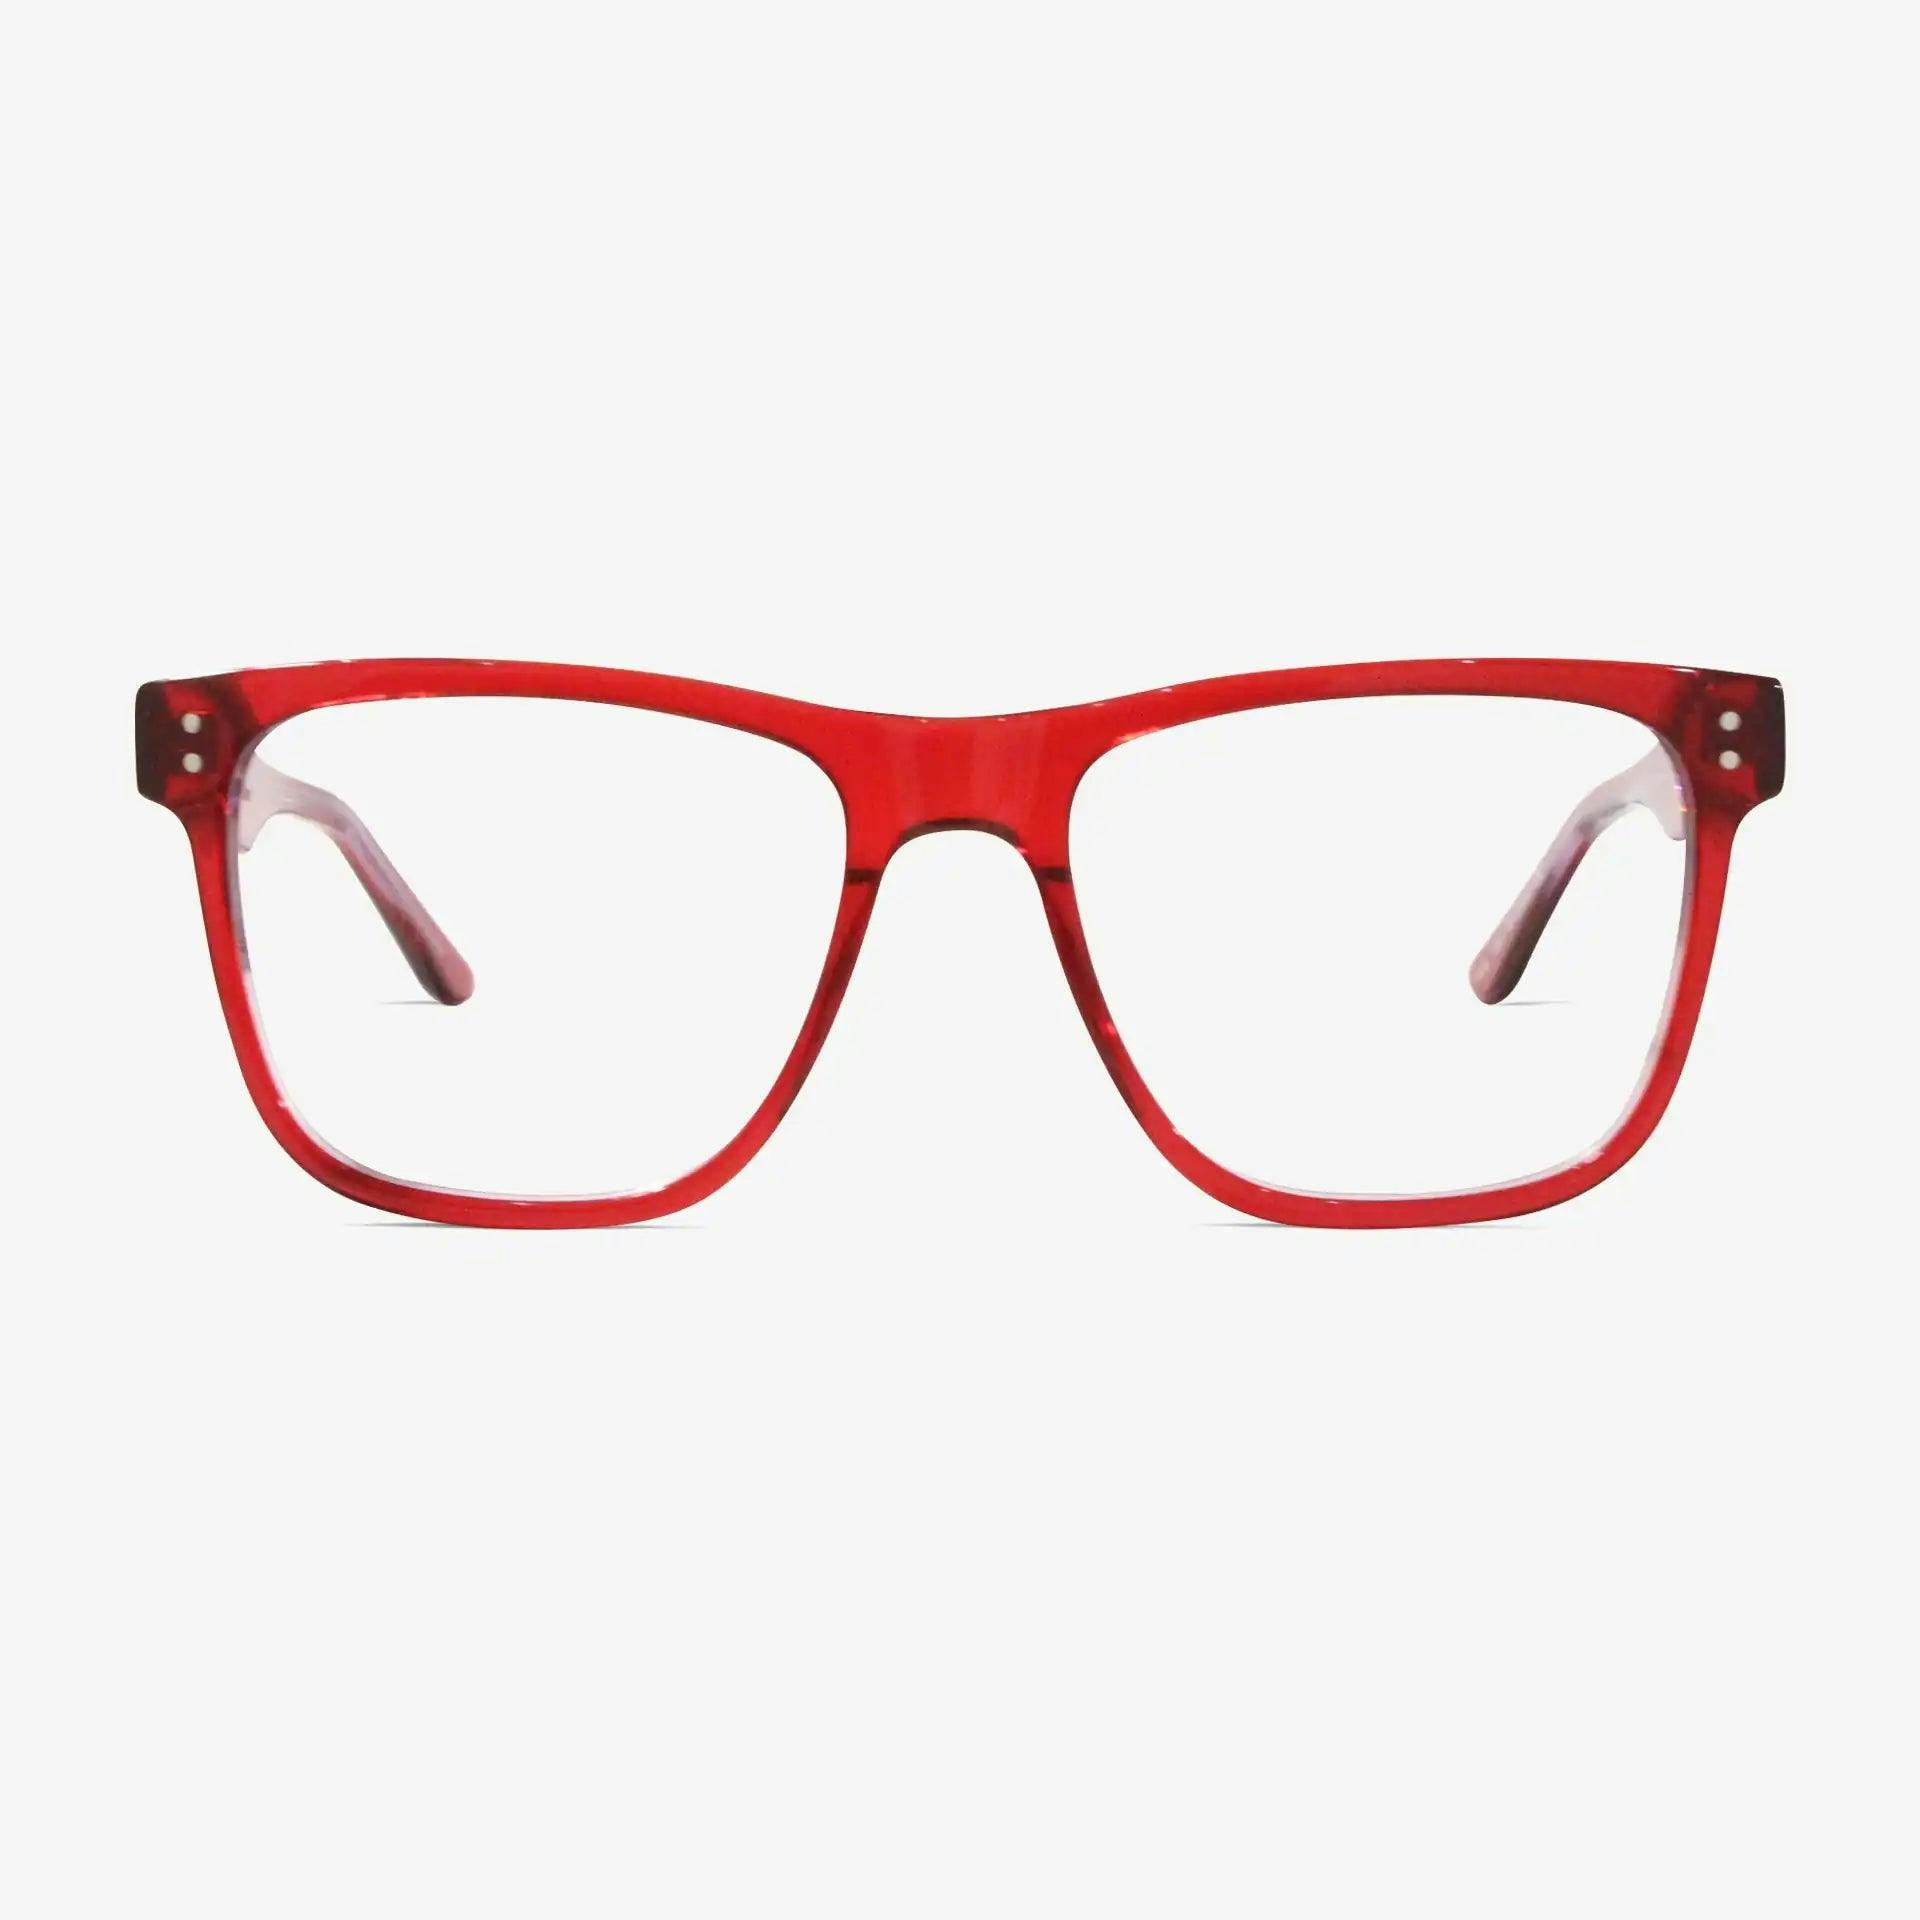 Huxley glasses | Fabes Minnesota Maroon 